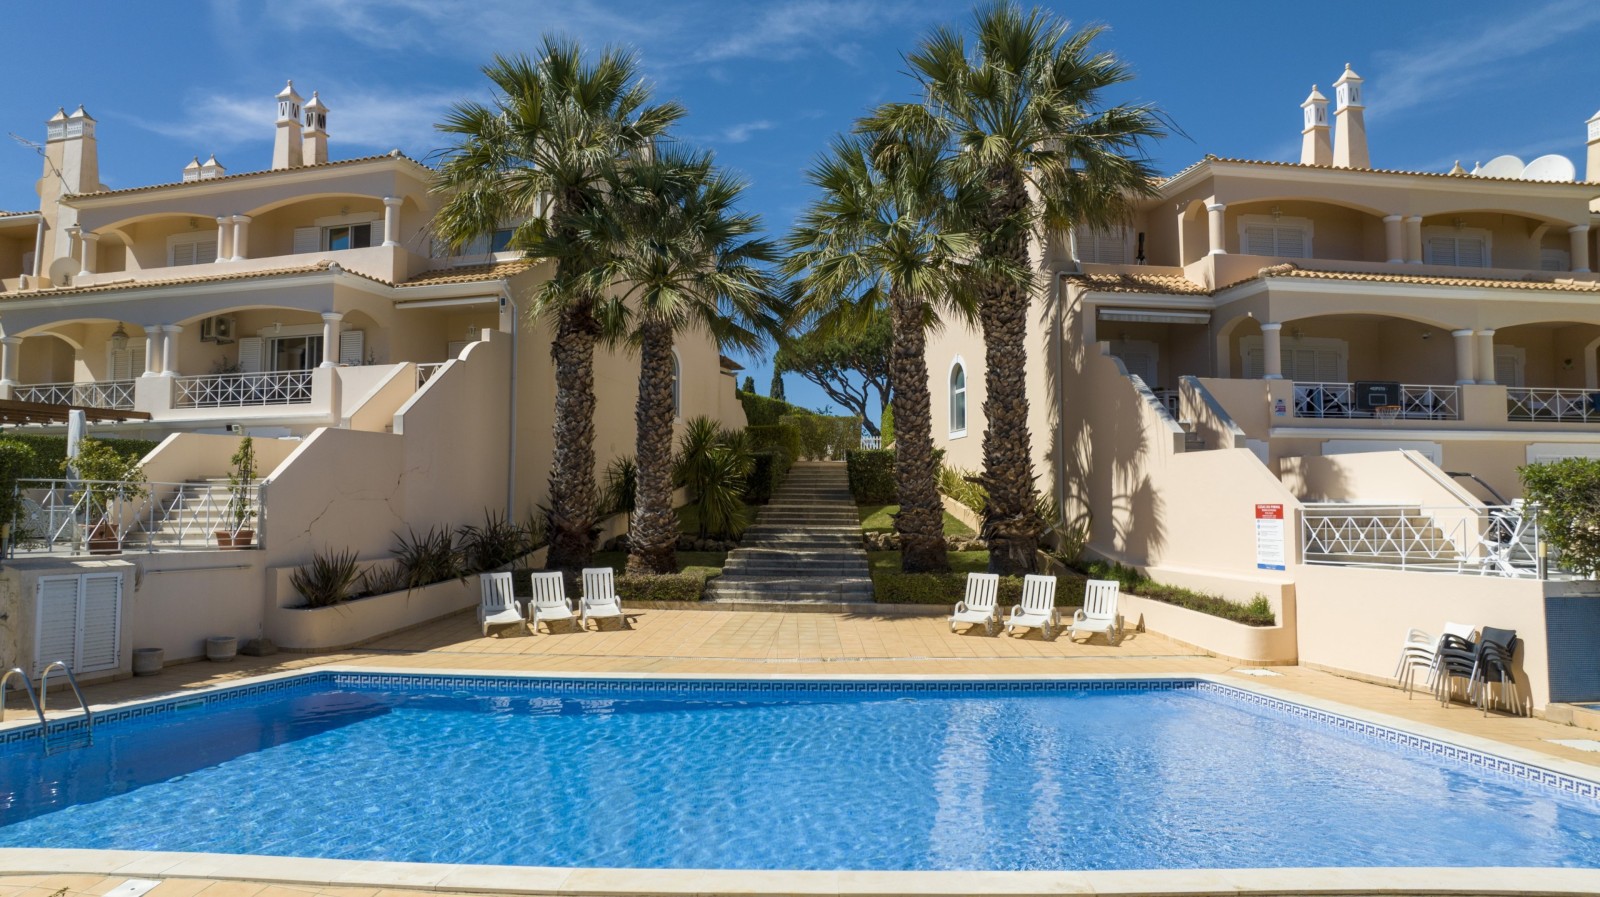 Moradia geminada V4, com piscina, para venda em Vilamoura, Algarve_237490